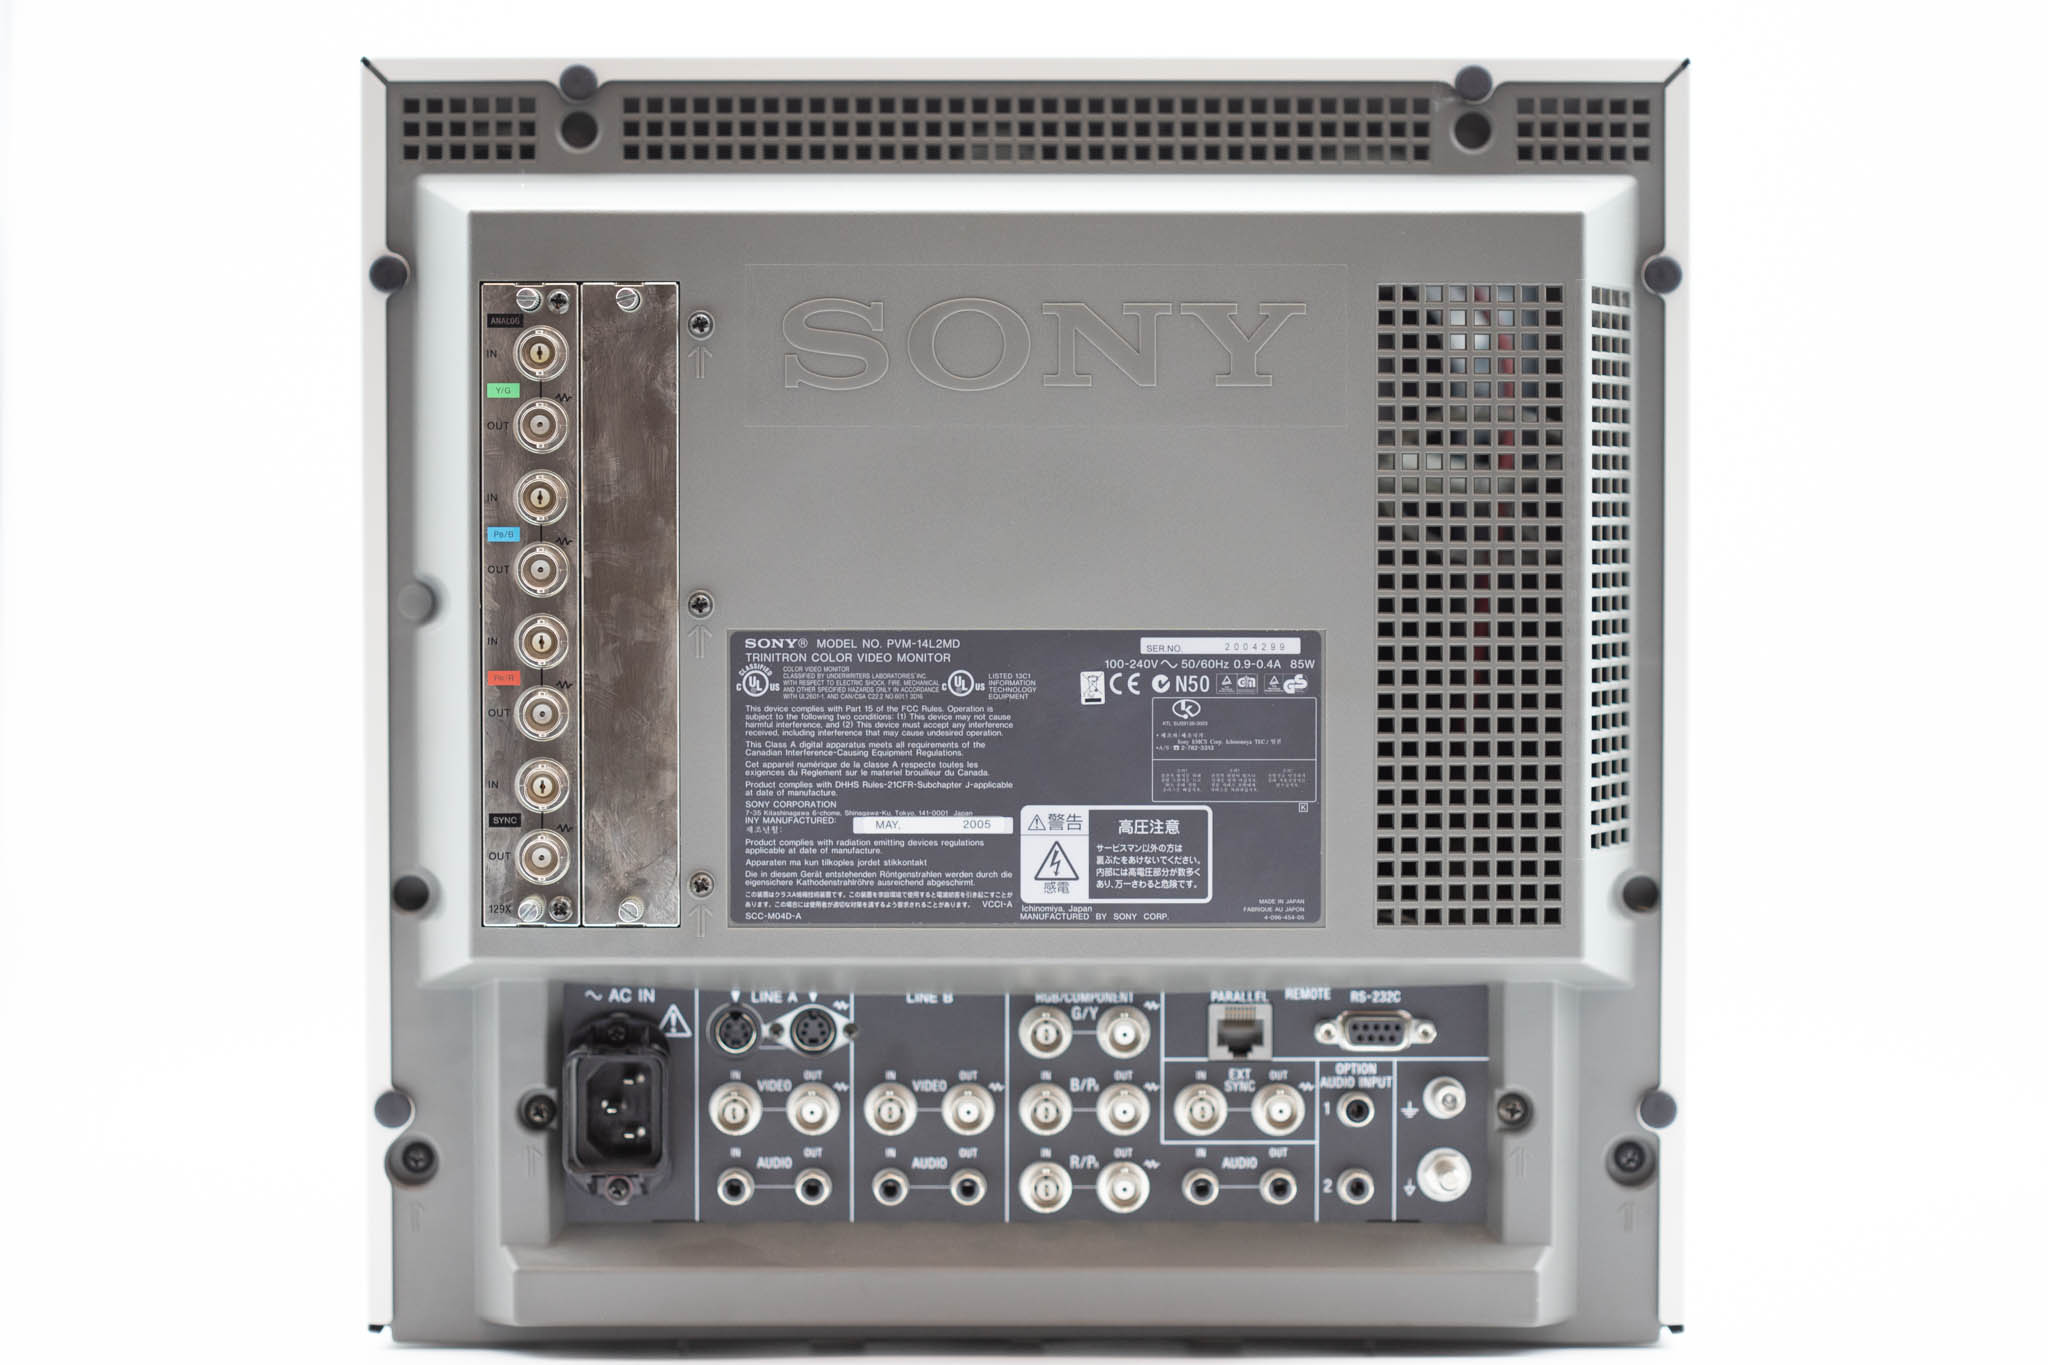 Sony 14" Trinitron Medical Grade Monitor - PVM-14L2MD